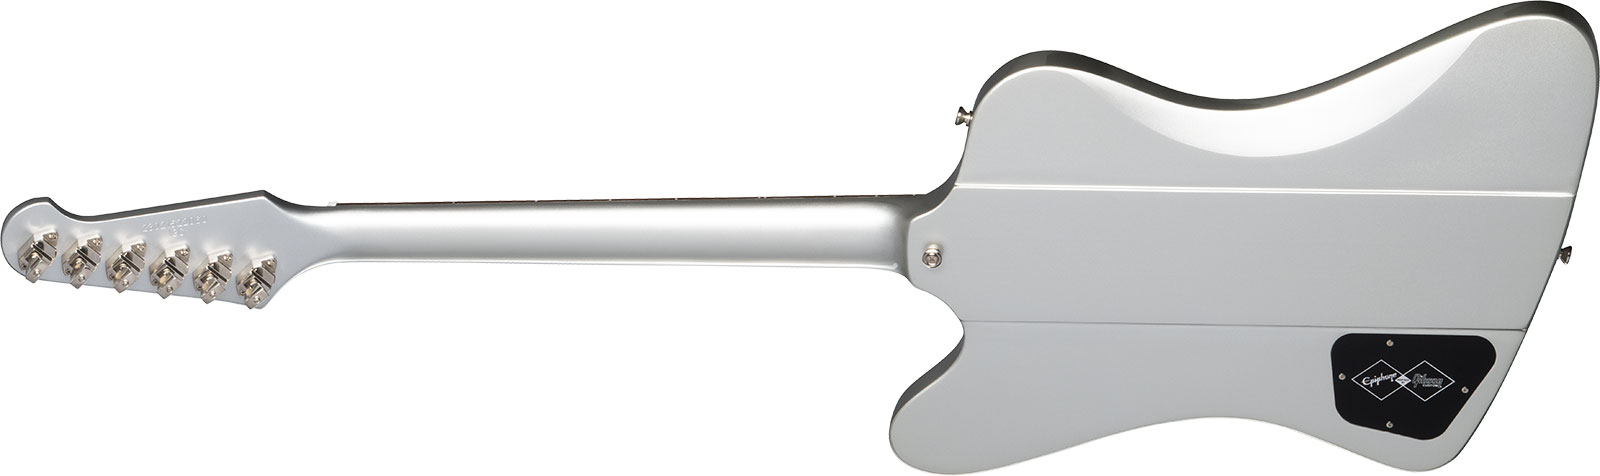 Epiphone Firebird I 1963 Inspired By Gibson Custom 1mh Ht Lau - Silver Mist - Guitarra electrica retro rock - Variation 1